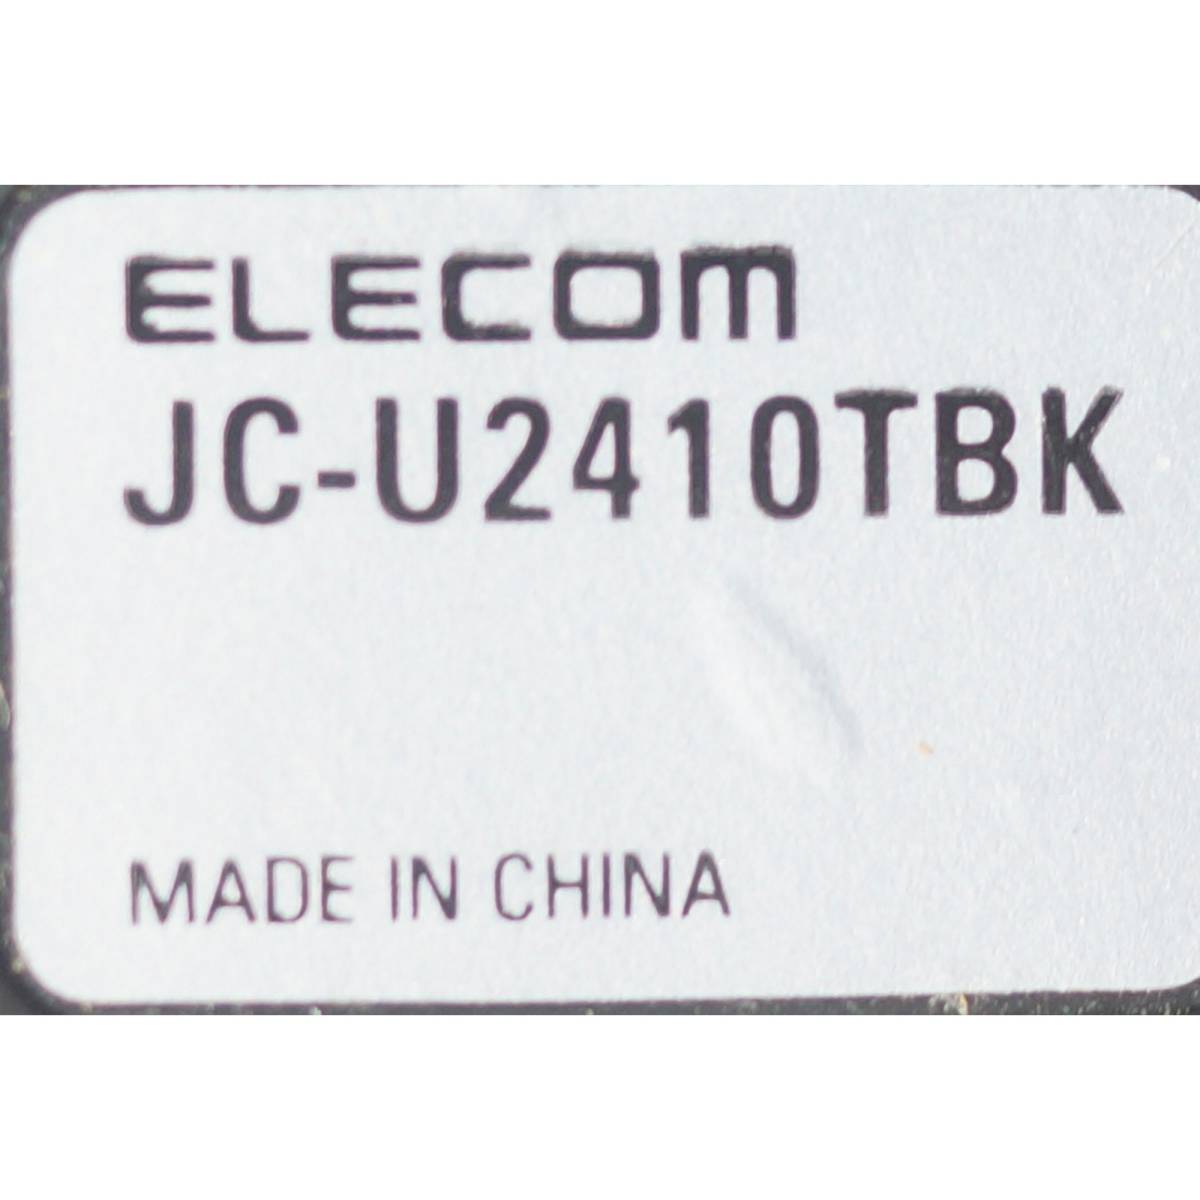  Elecom USB controller JC-U2410TBK